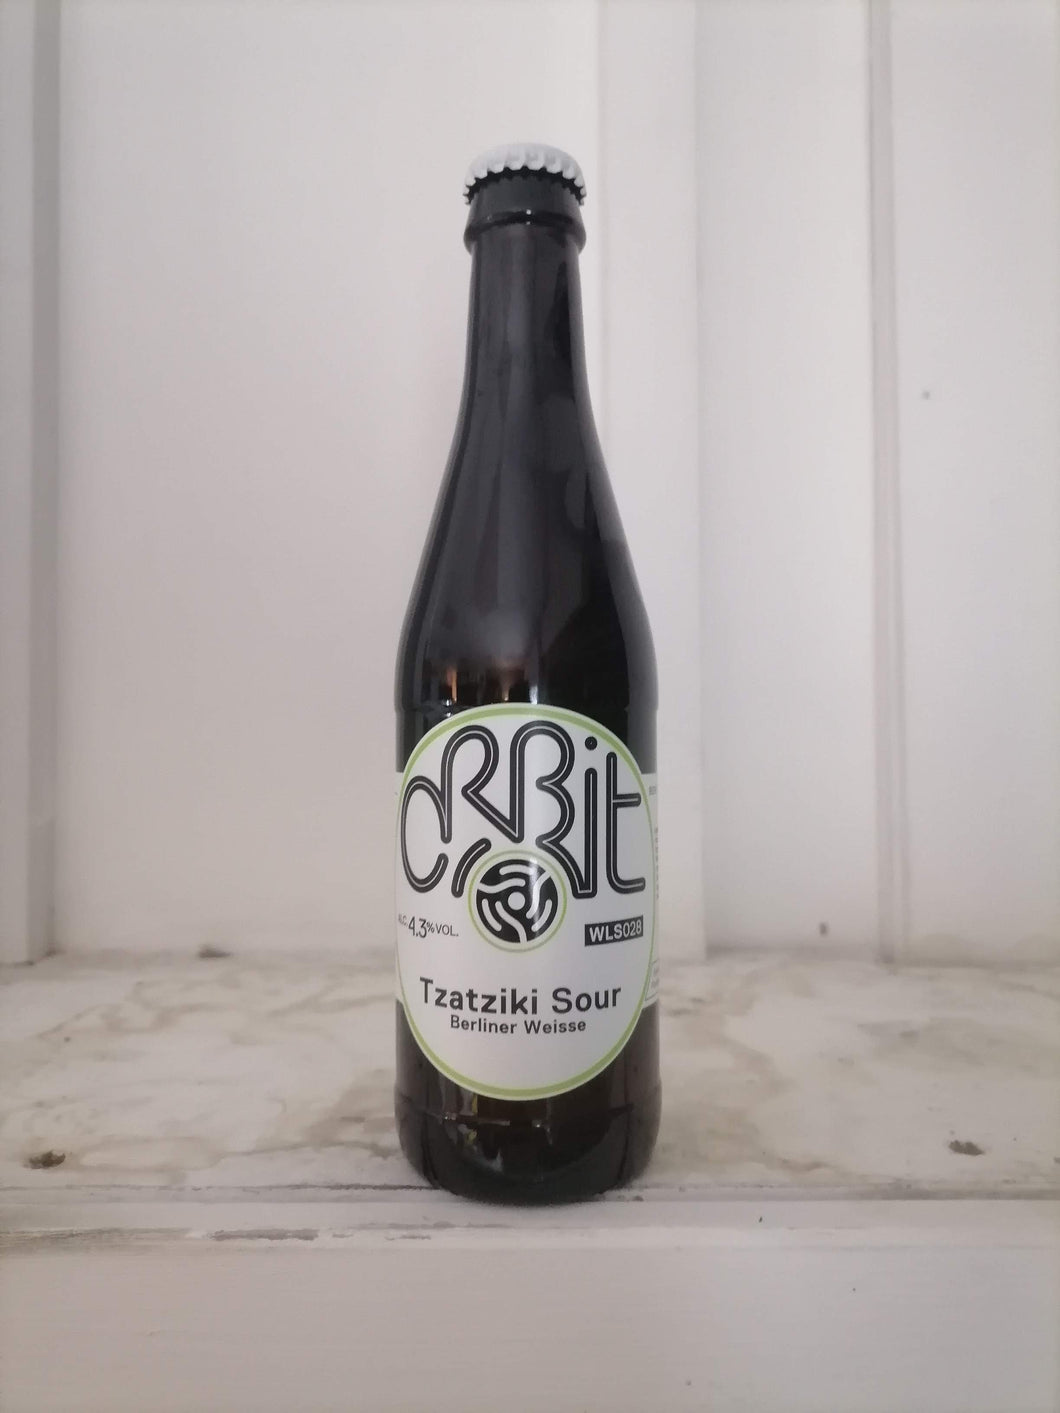 Orbit Tzatziki Sour 4.3% (330ml bottle)